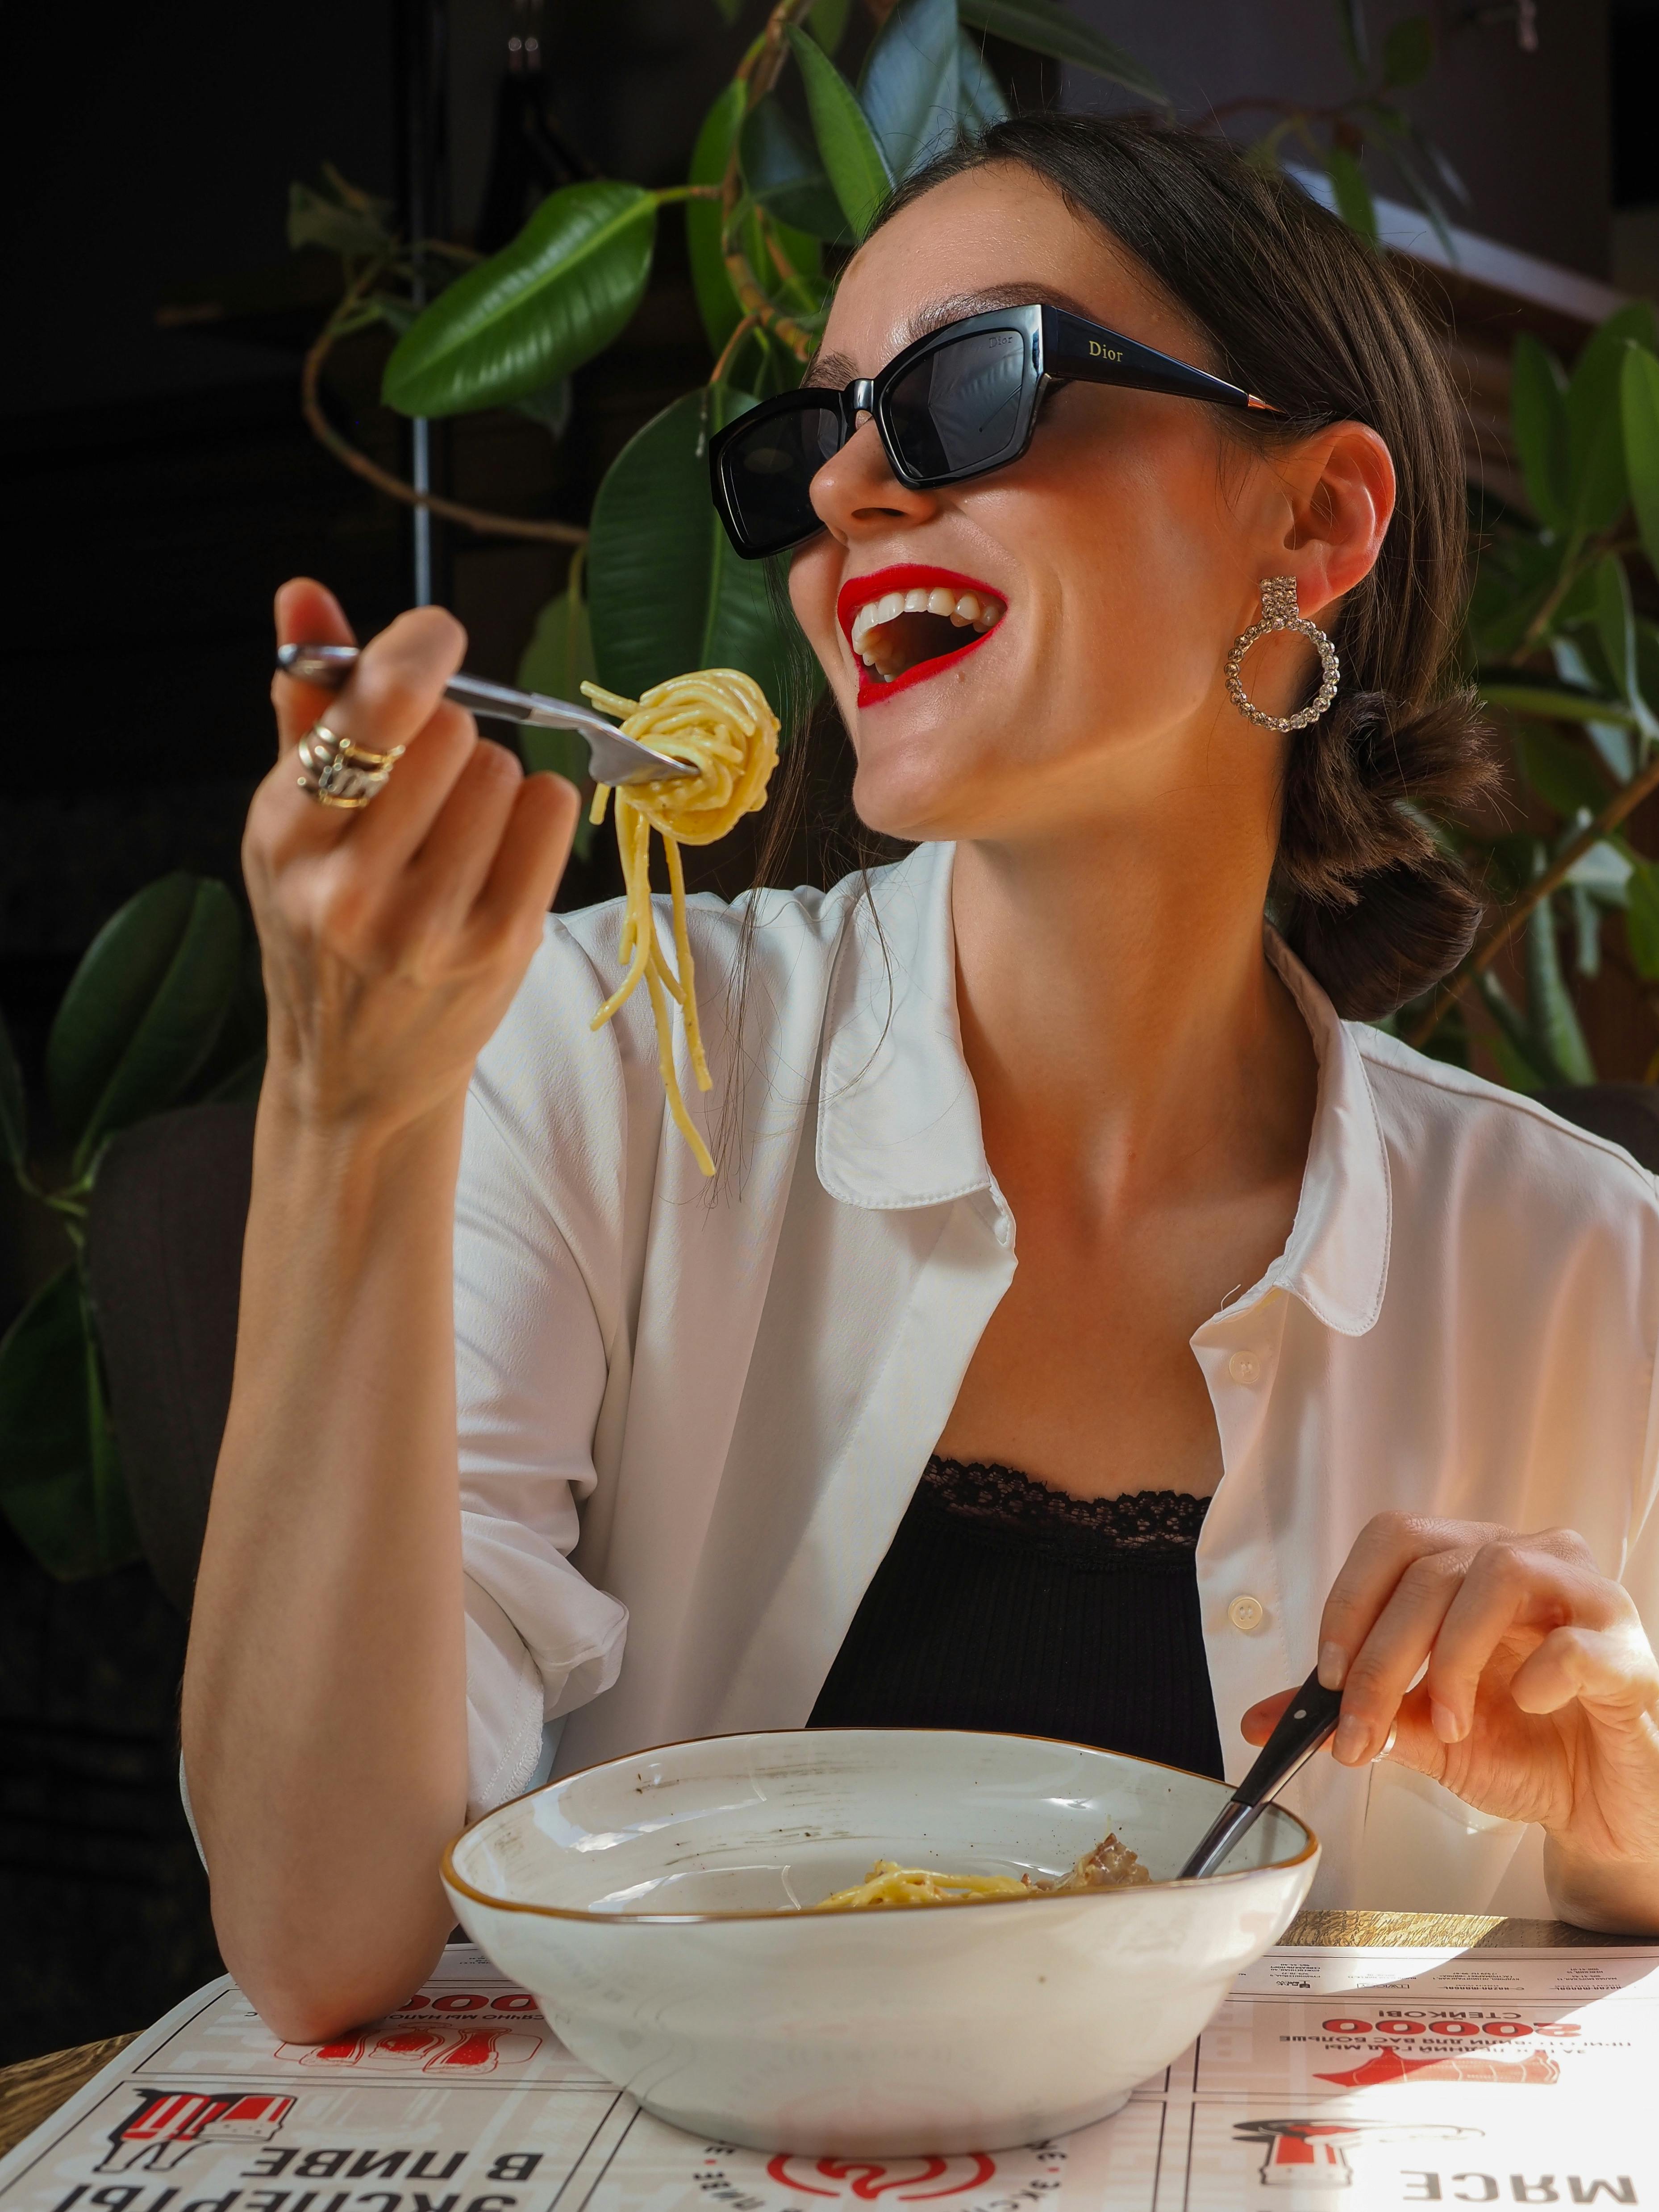 smiling woman eating pasta in restaurant